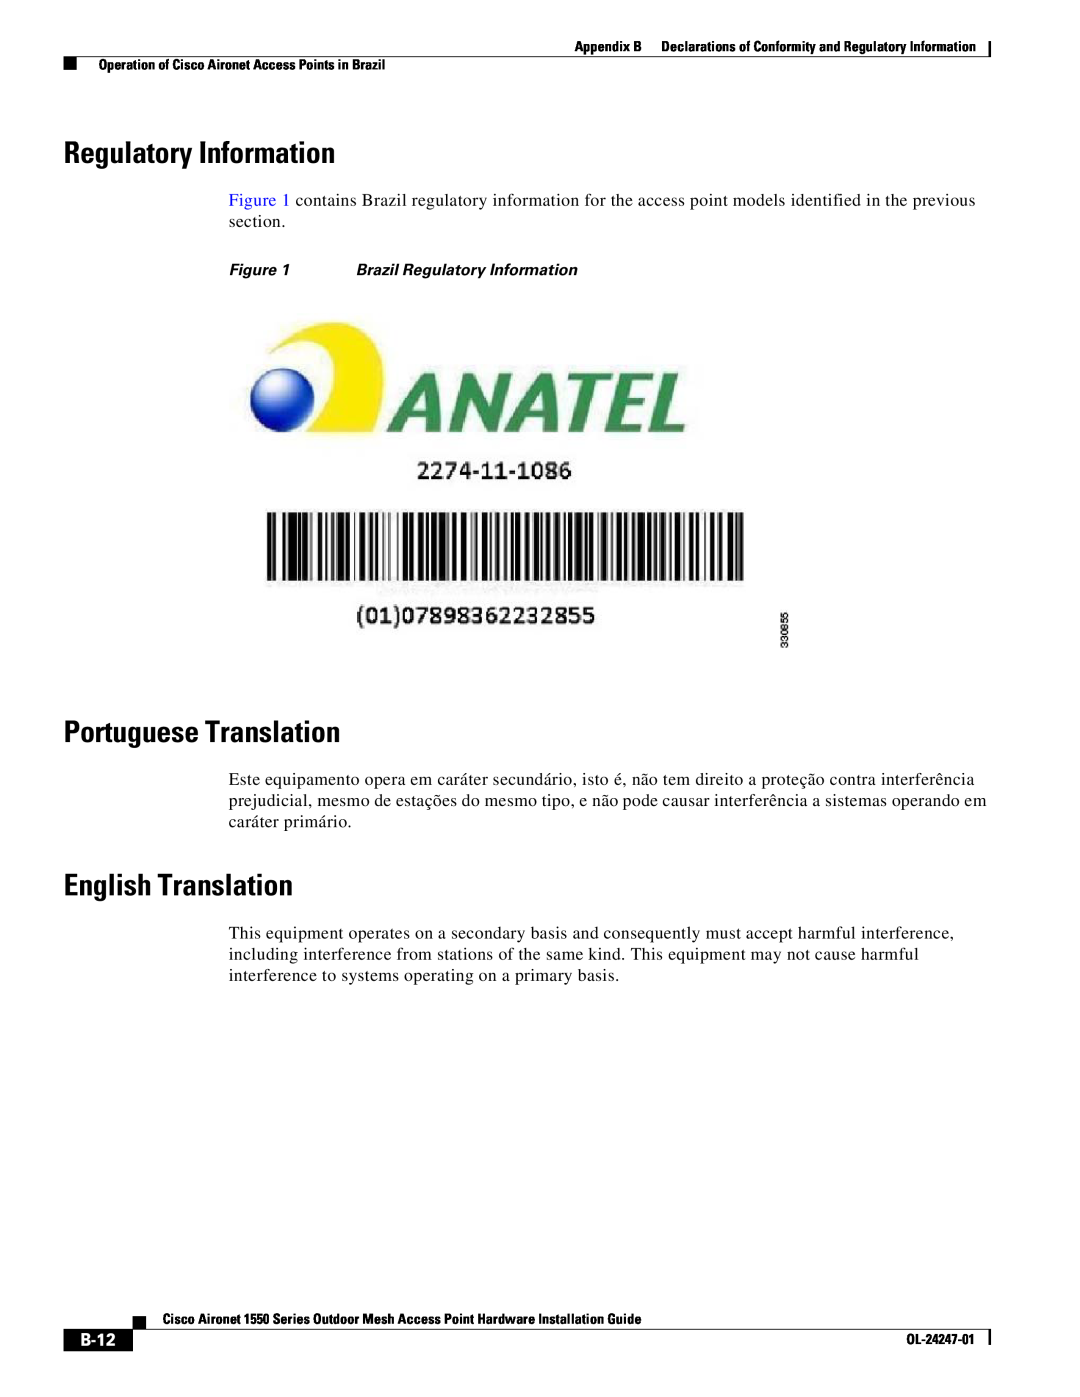 Cisco Systems AIRCAP1552EUAK9, AIRCAP1552EAK9RF Regulatory Information, Portuguese Translation, B-12, English Translation 